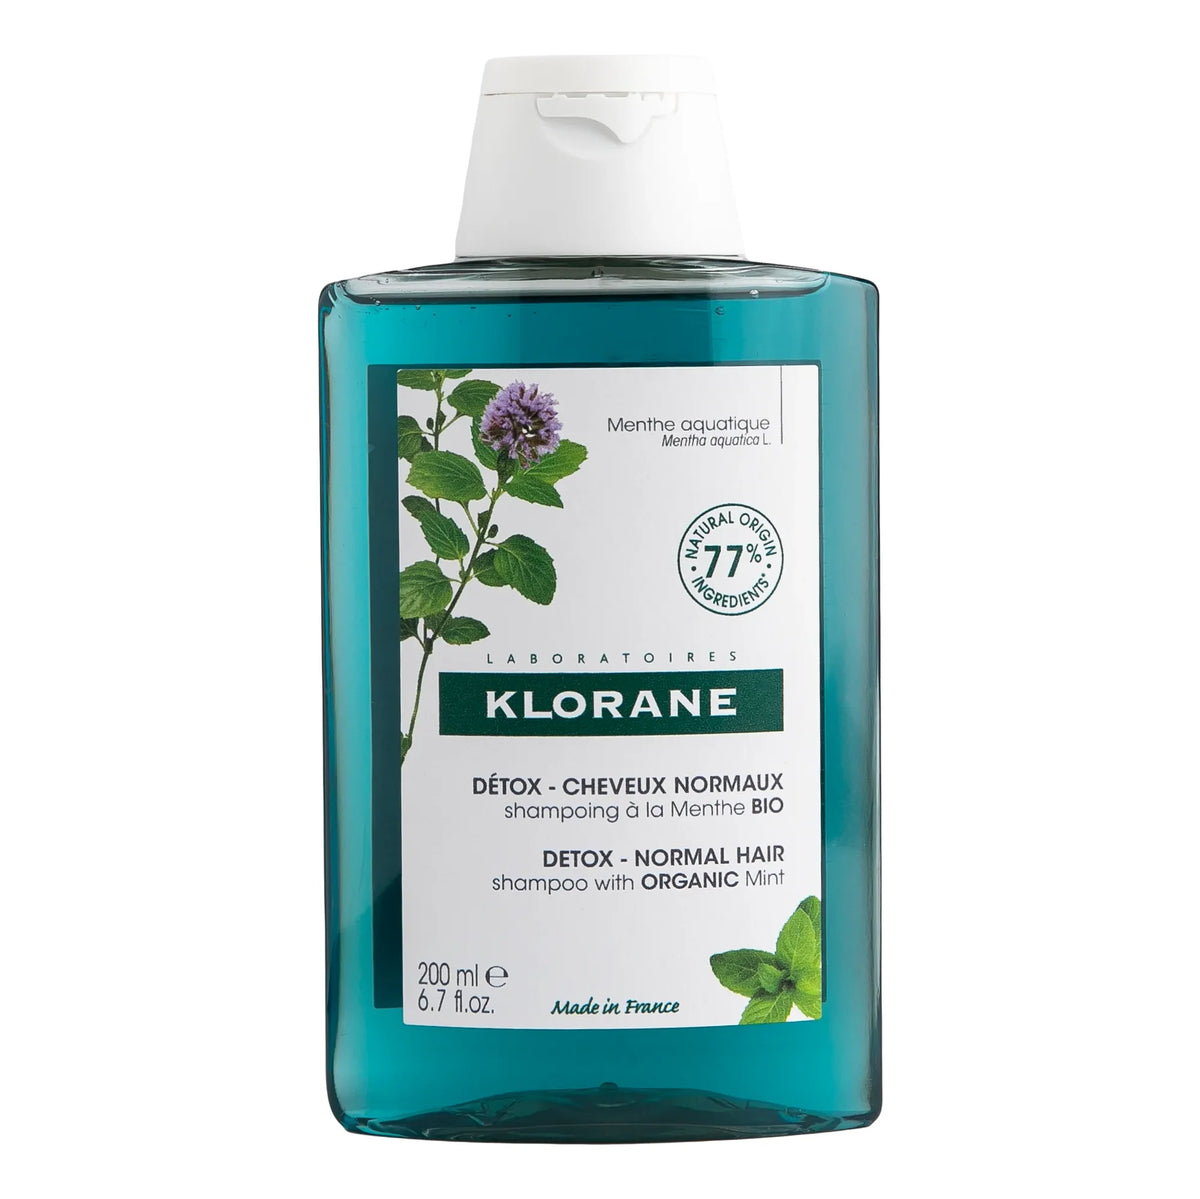 Shampoo with Organic Mint Detox